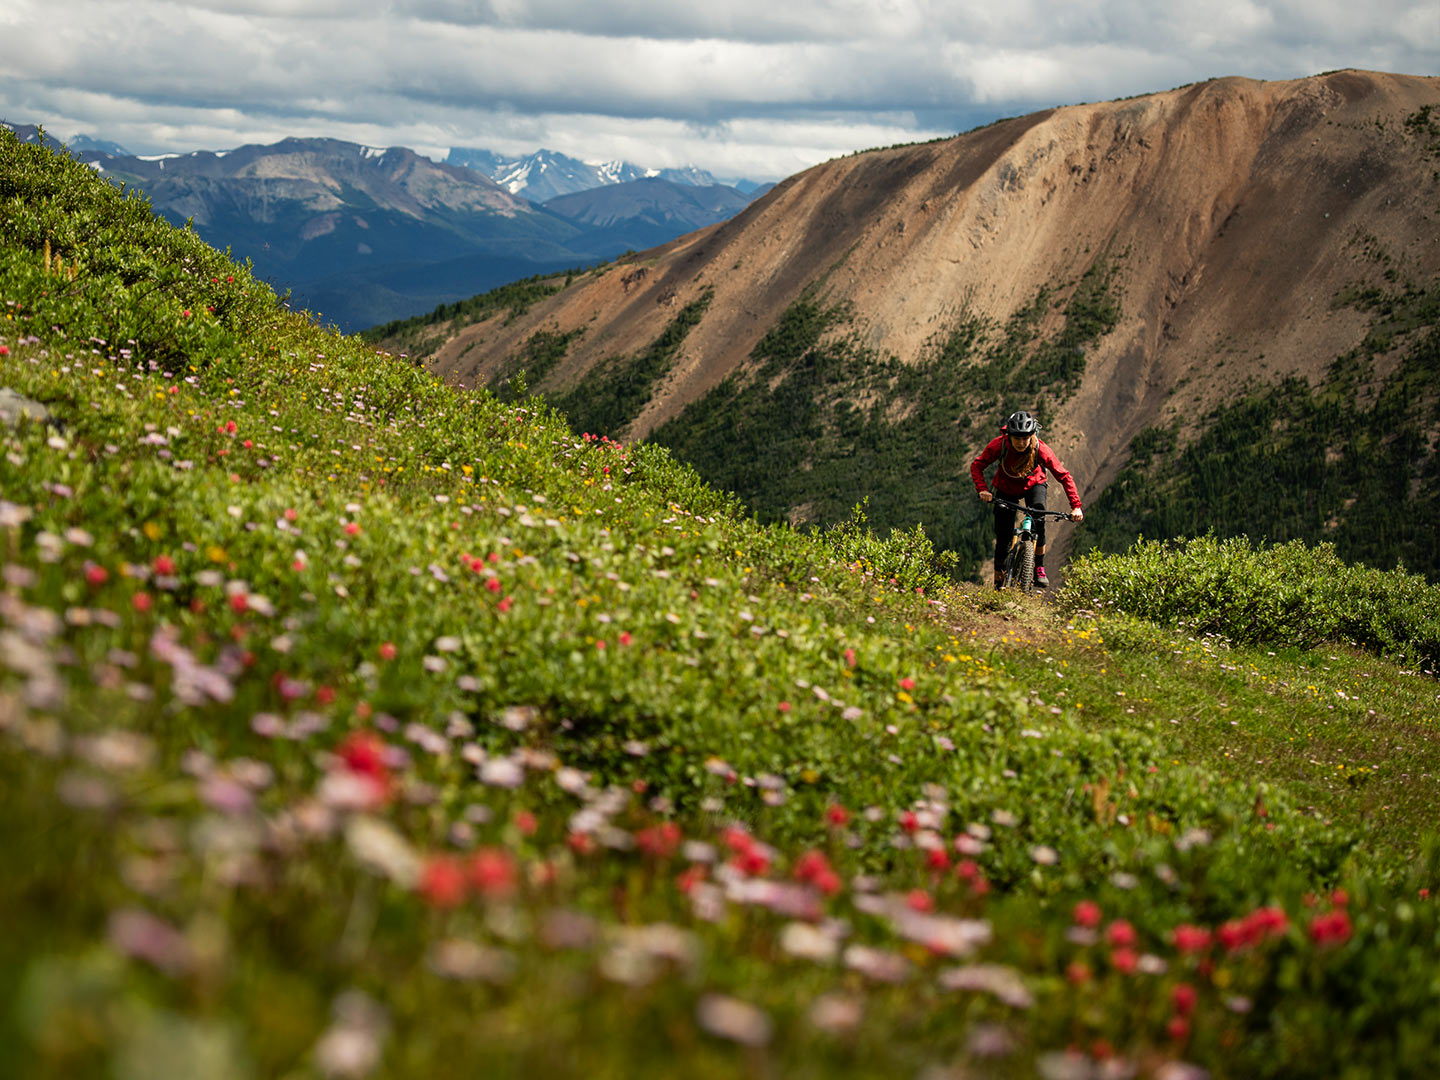 Ciclista distante sobe por trilha coberta de flores silvestres